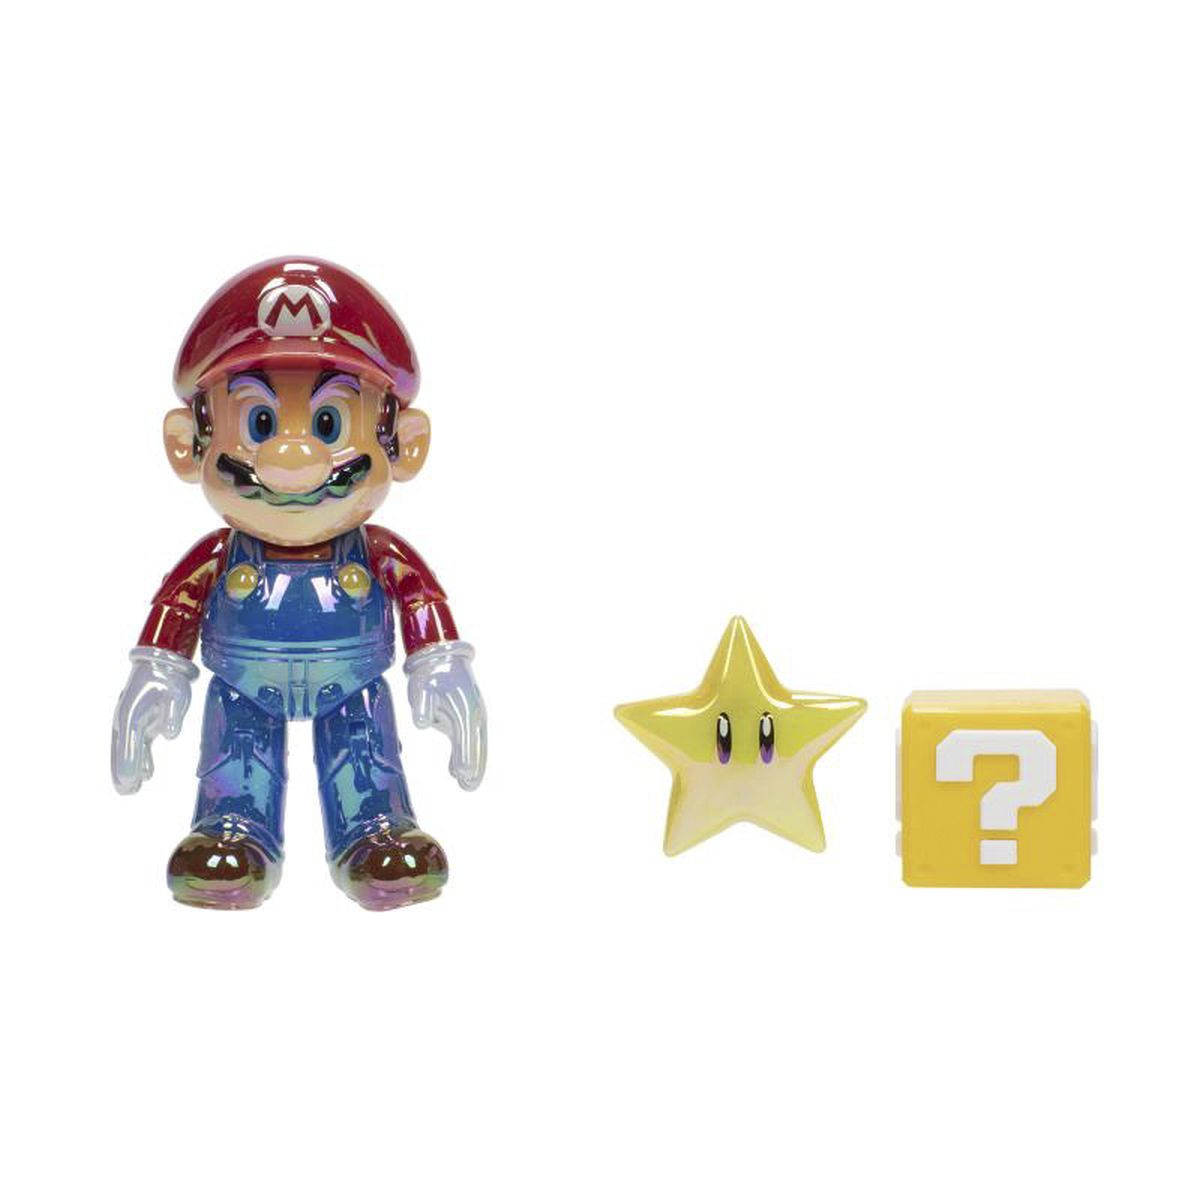 Mario cm Stern - Mario (Sammlerbox) Figur 10 Super